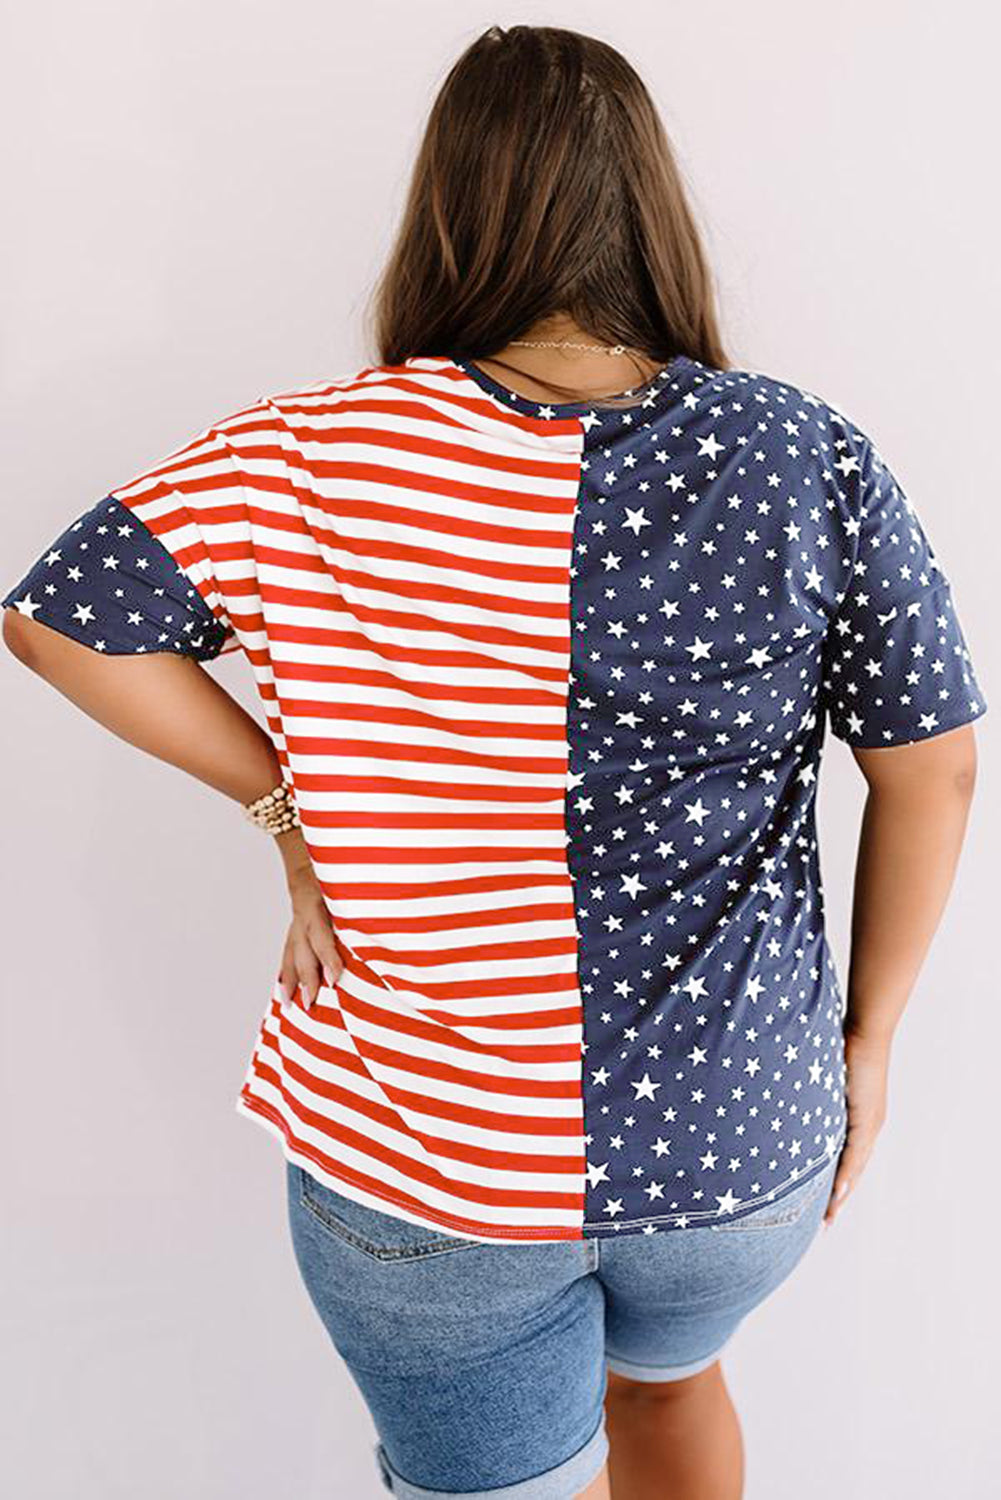 Plus Size Stripes and Stars Flag Print Patriotic Top